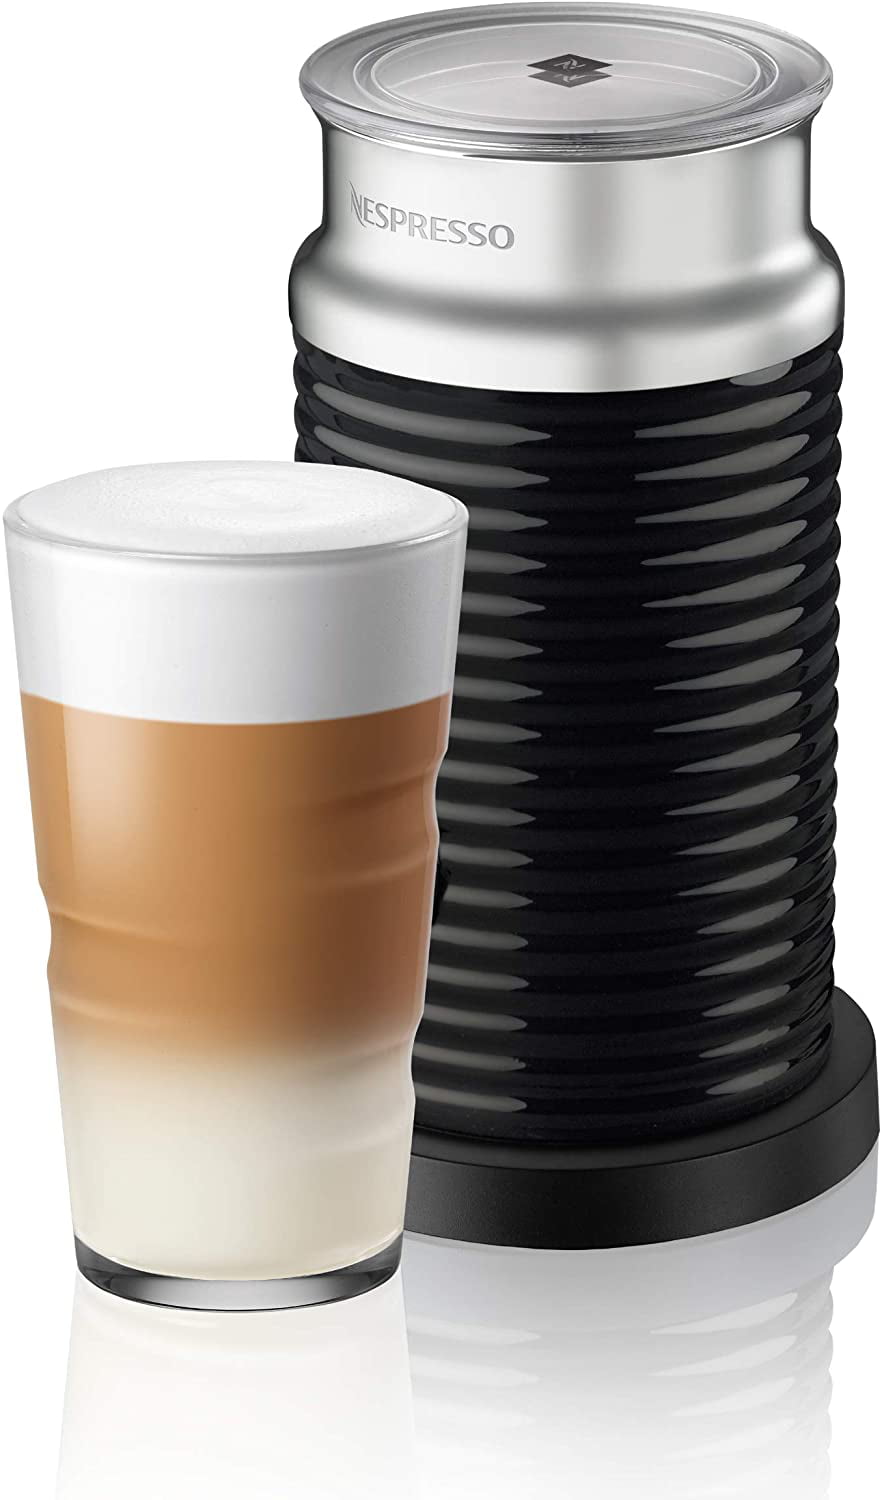 One Size Nespresso 3694-US-BK Aeroccino3 Milk Frother Black 